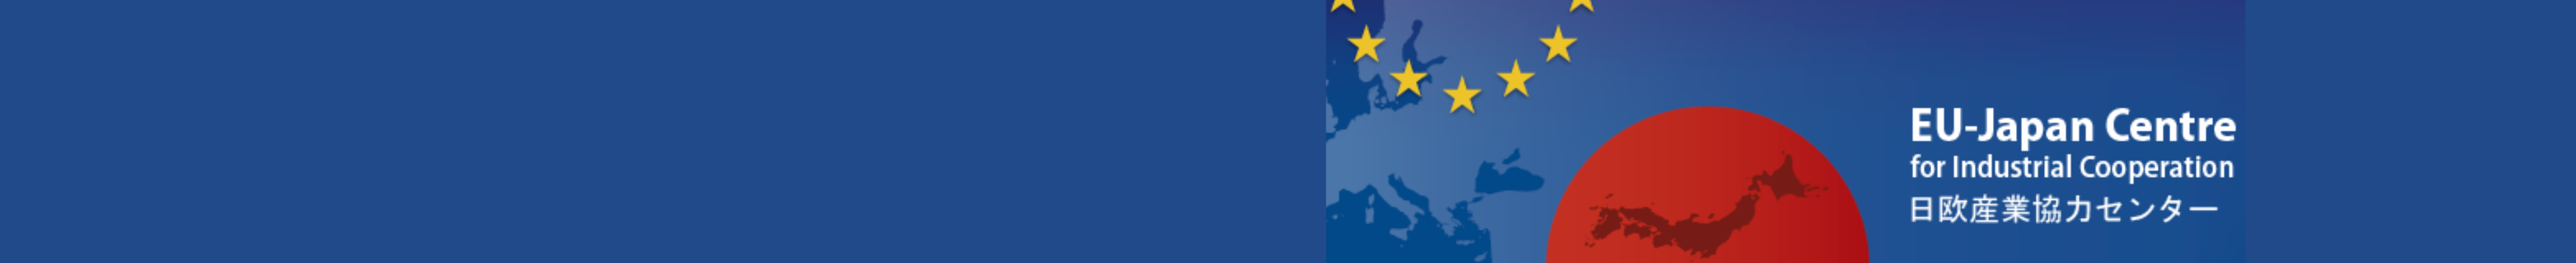 EU Japan Centre Banner